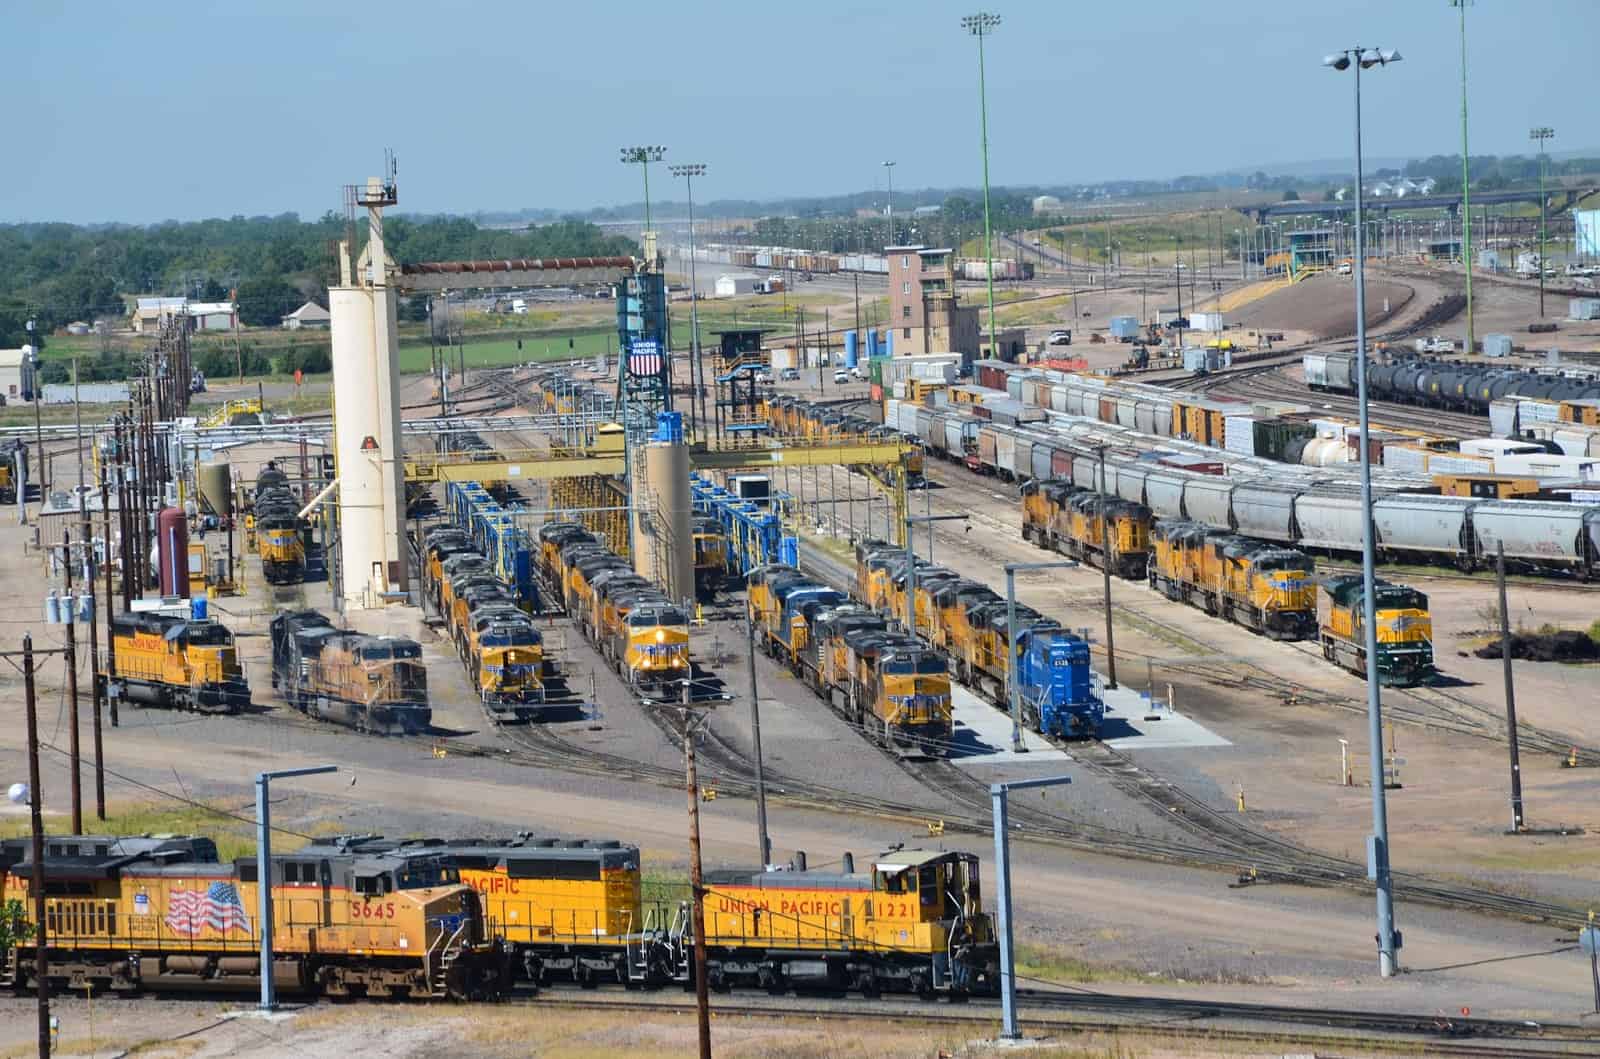 Golden Spike Tower Union Pacific rail yard in North Platte Nebraska